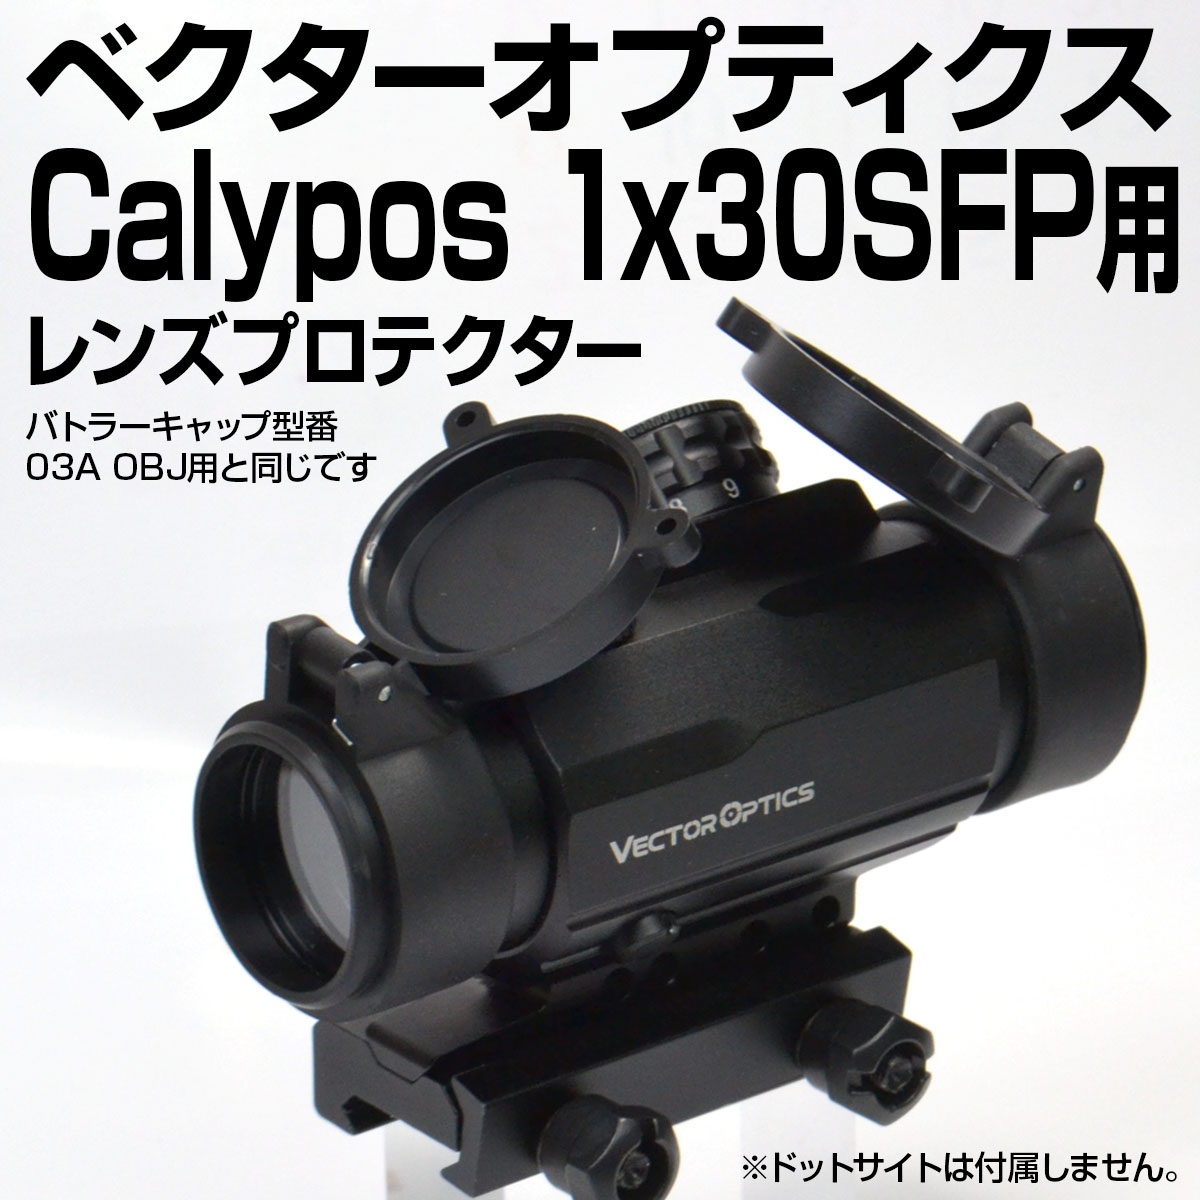 VectorOptics Calypos 1x30SFP用プロテクター | あきゅらぼ通販